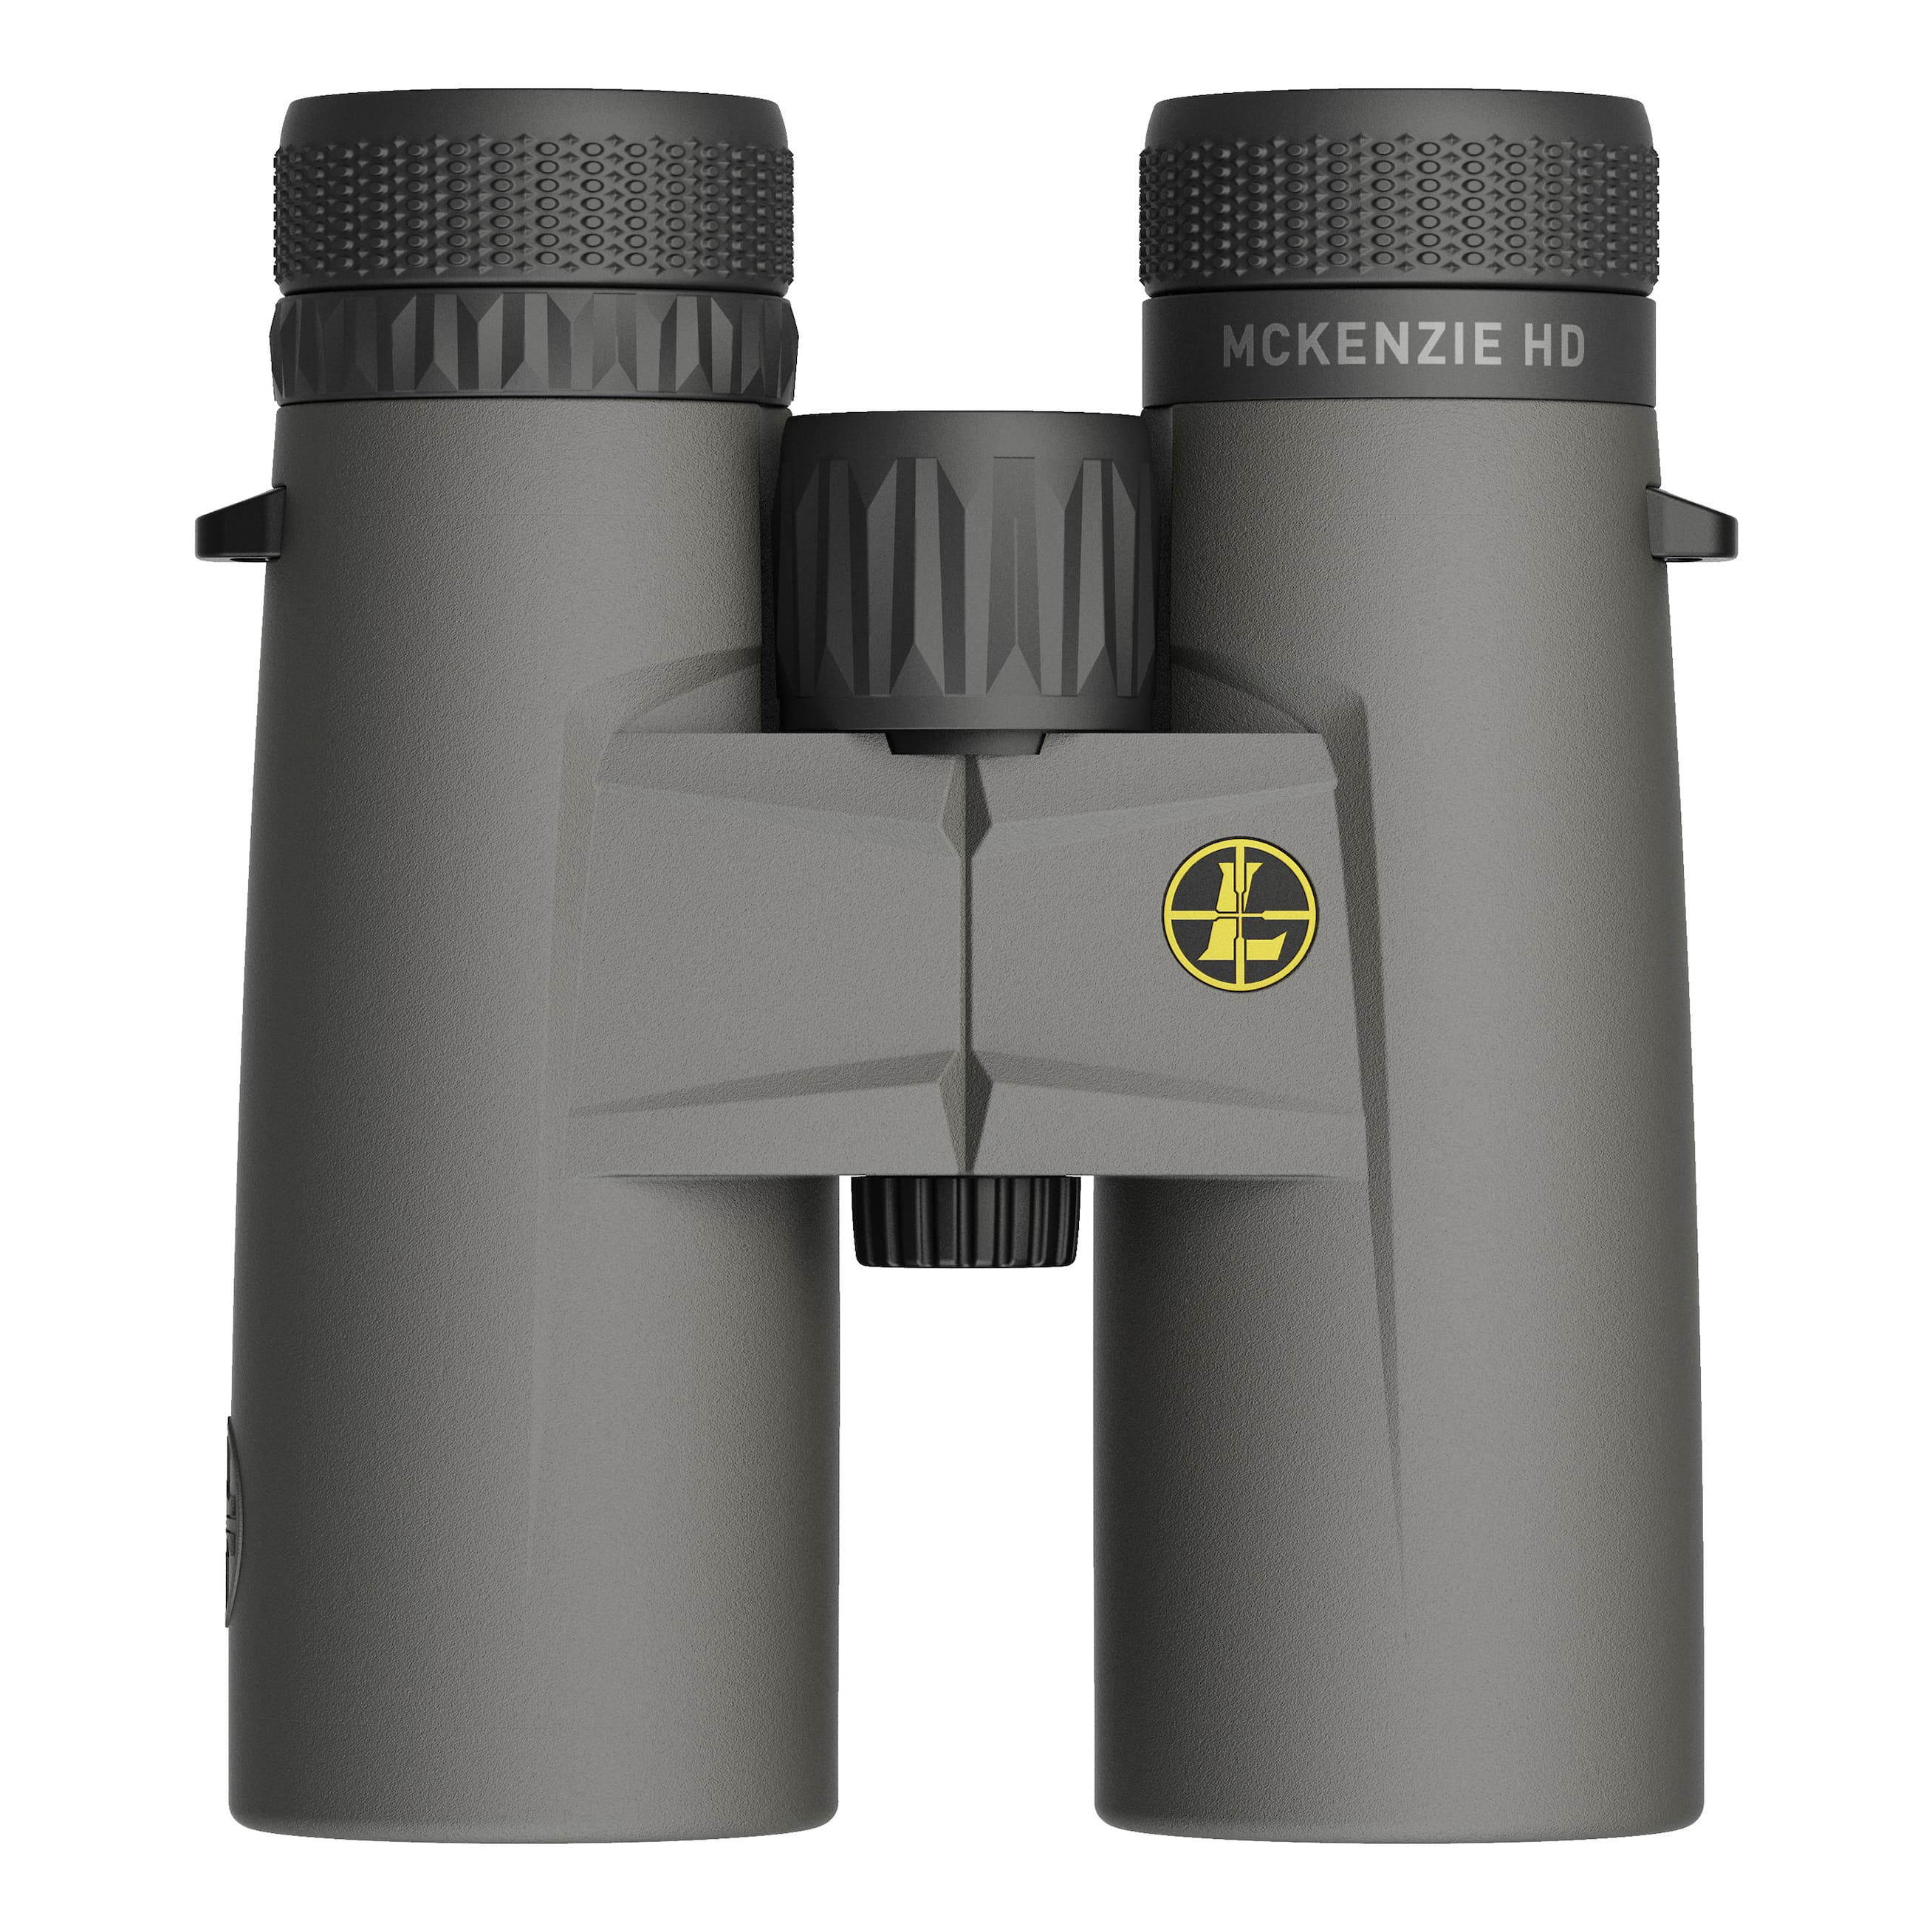 Leupold BX-1 McKenzie™ HD Binoculars - 8x42mm